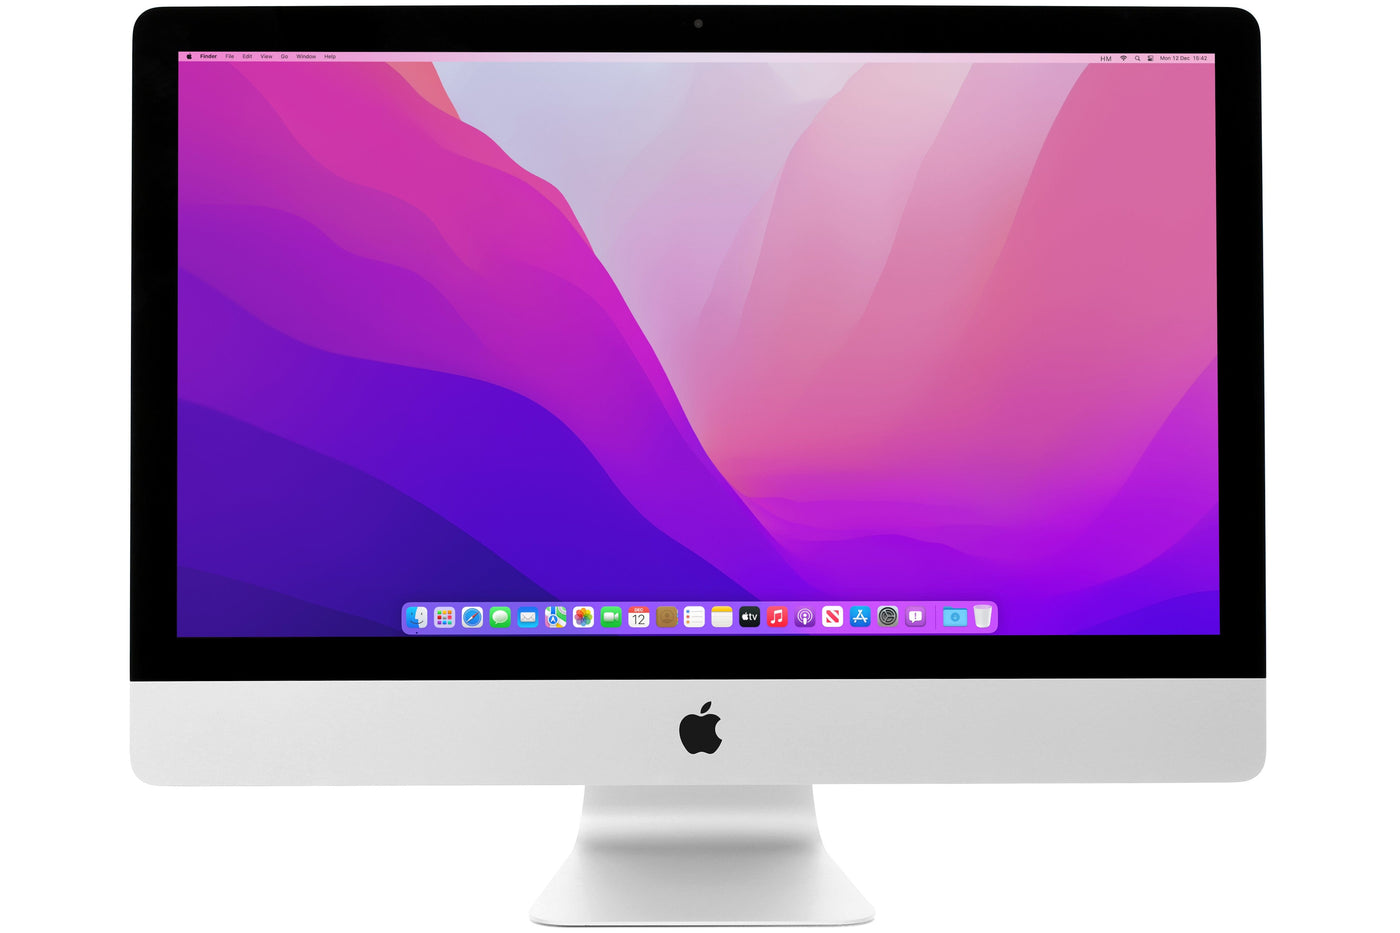 Apple iMac 27-inch iMac 5K Retina 27-inch Core i5 3.4GHz (Mid 2017) - Excellent